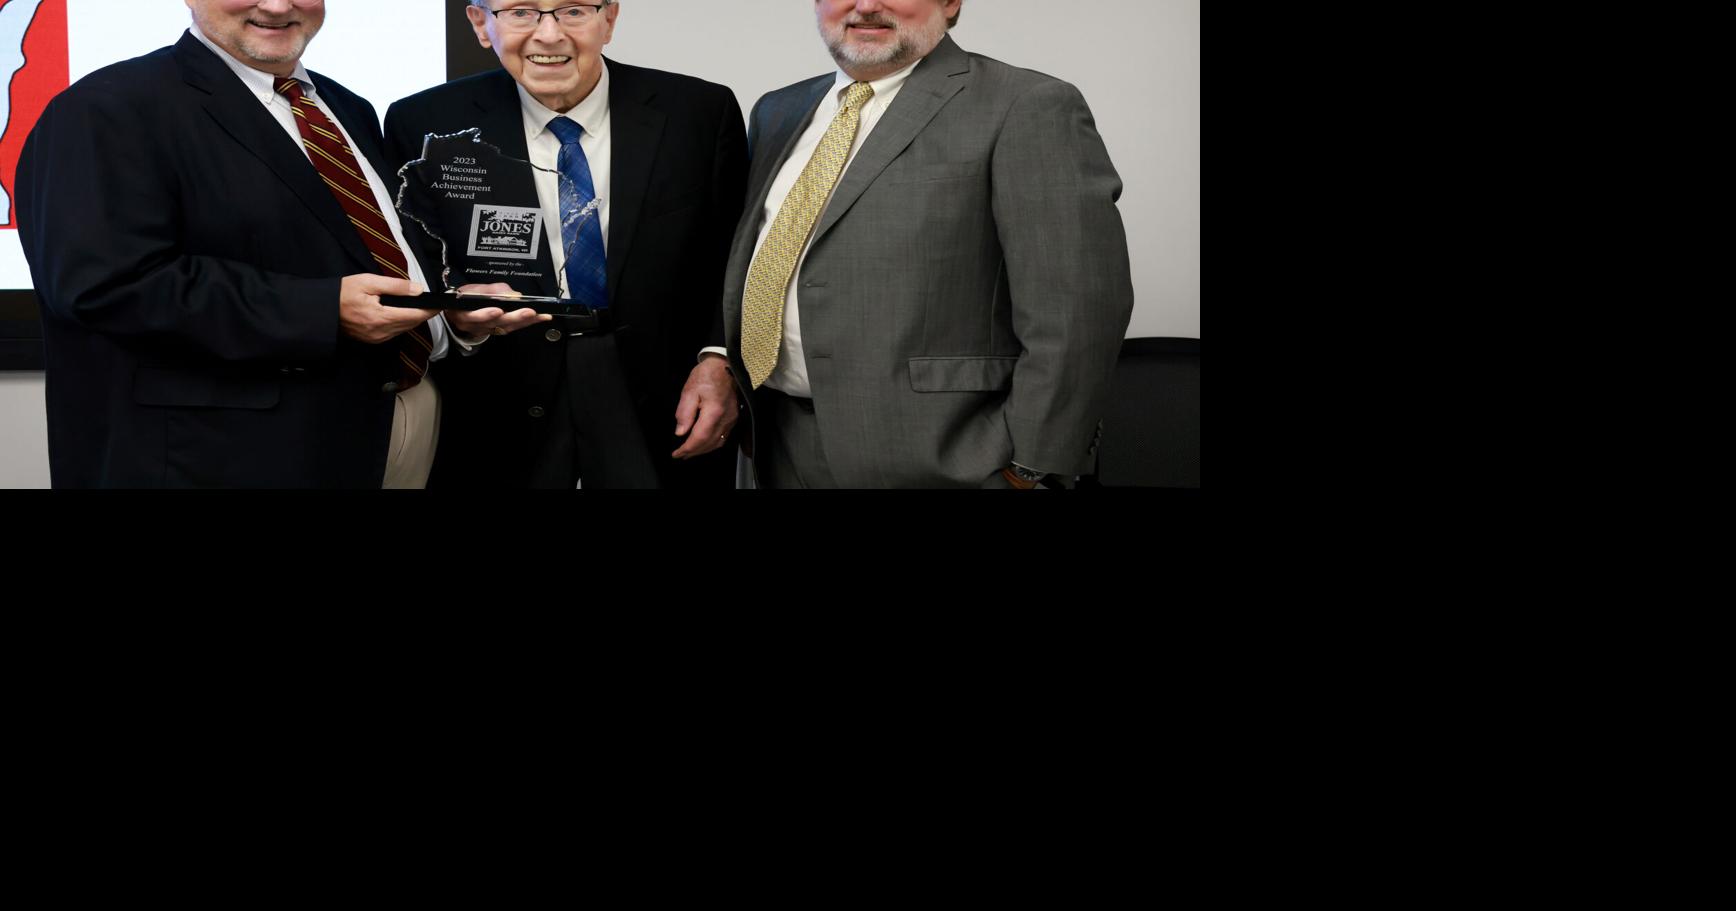 Jones Dairy Farm receives Wisconsin Business Achievement Award | Fort Atkinson